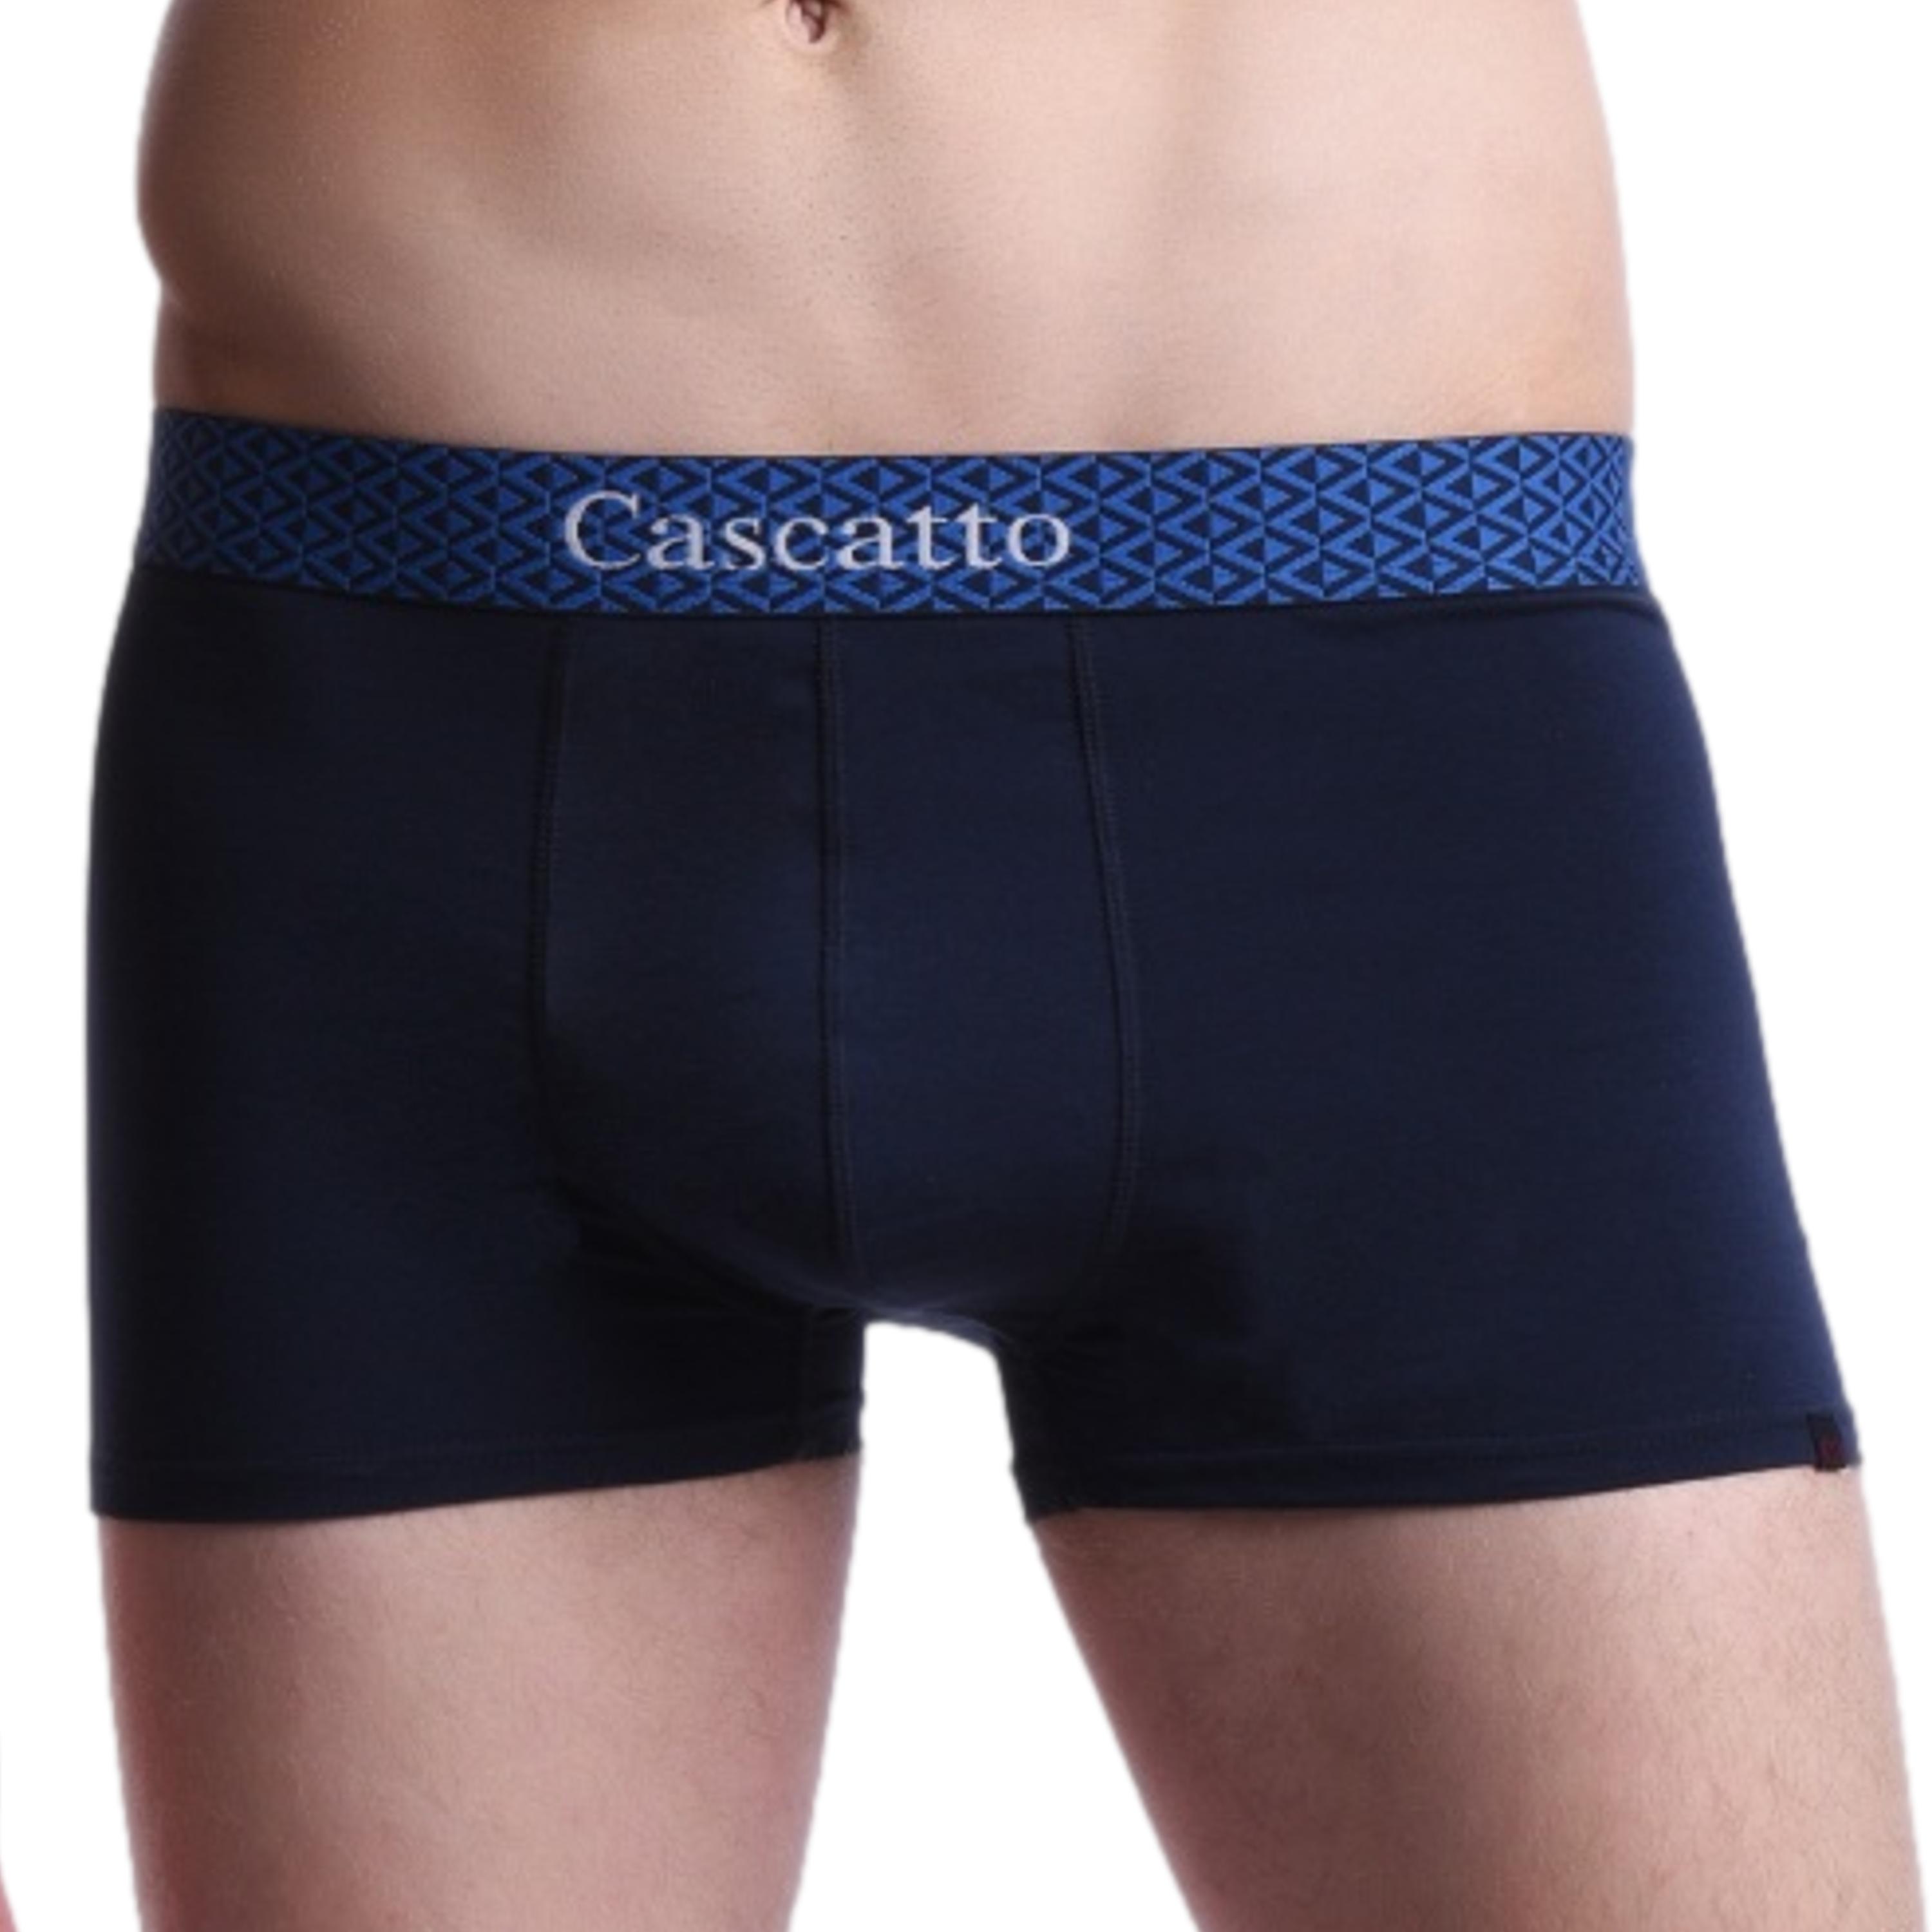 Трусы Cascatto боксер для мужчин, синий, размер M, BXM1806